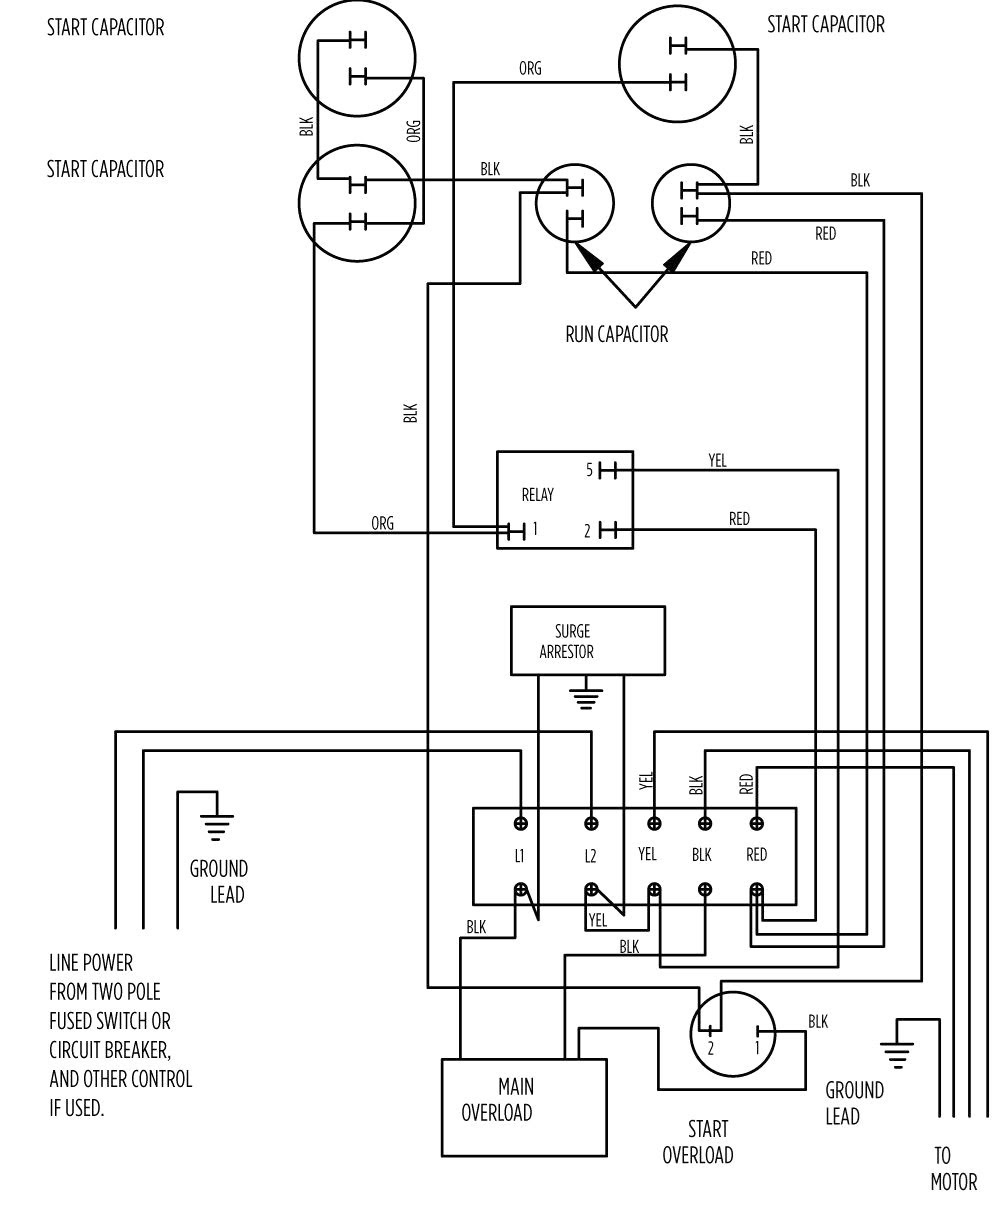 Single Phase 230V Motor Wiring Diagram from lh6.googleusercontent.com